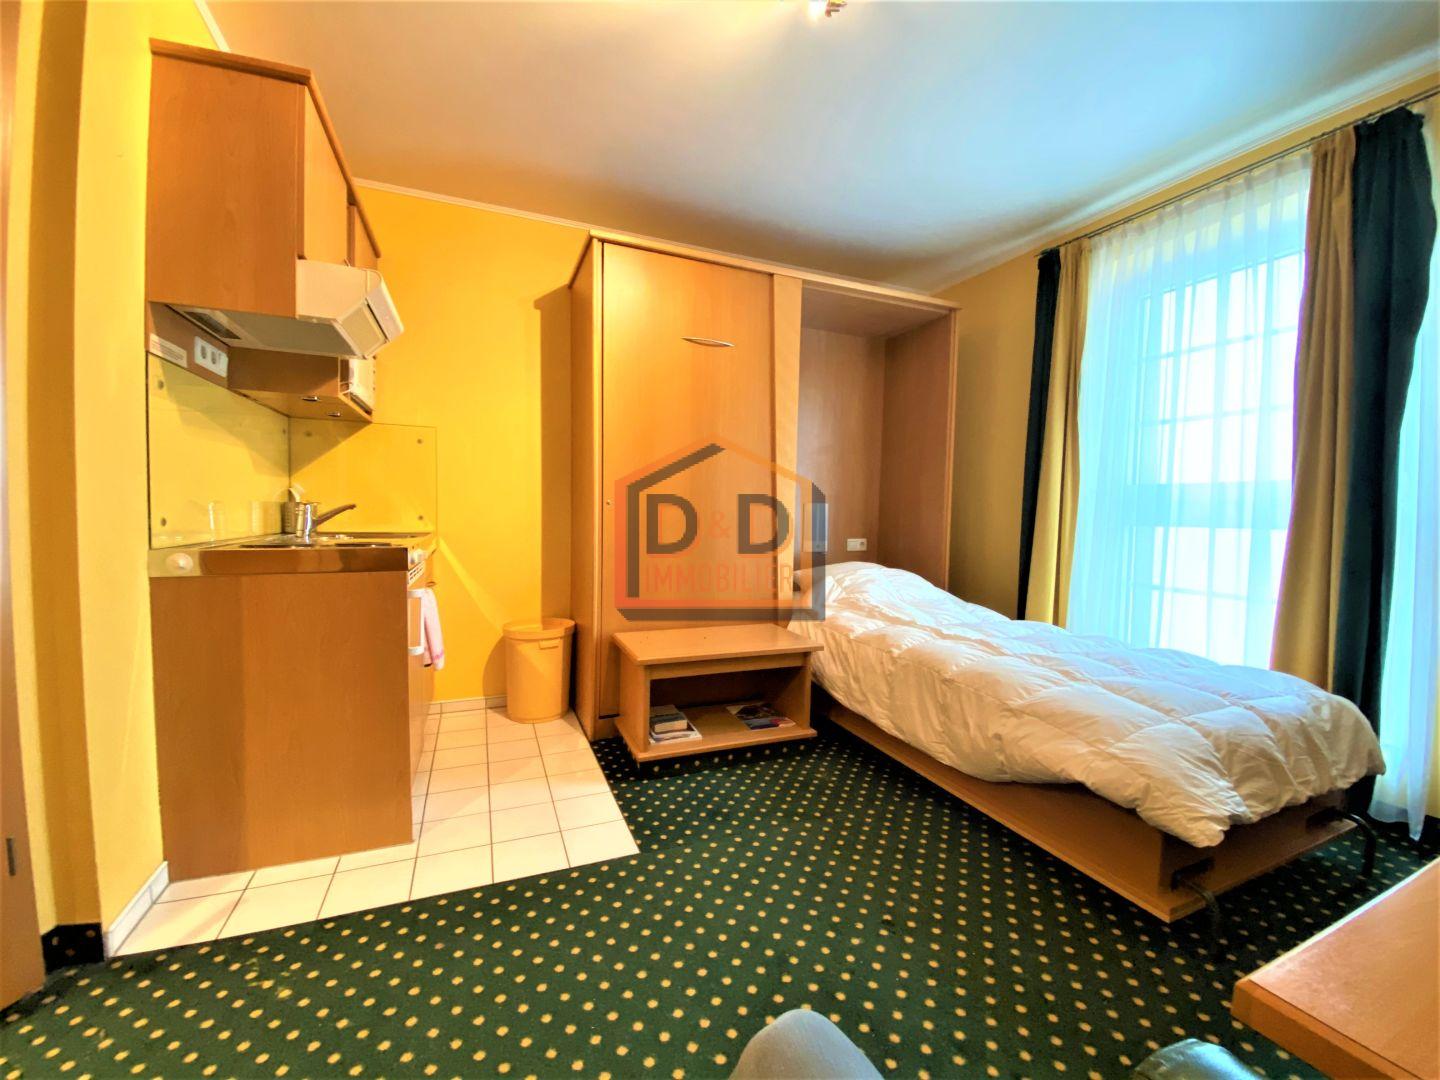 Appartement à Luxembourg-Kirchberg, 19 m², 1 chambre, 950 €/mois